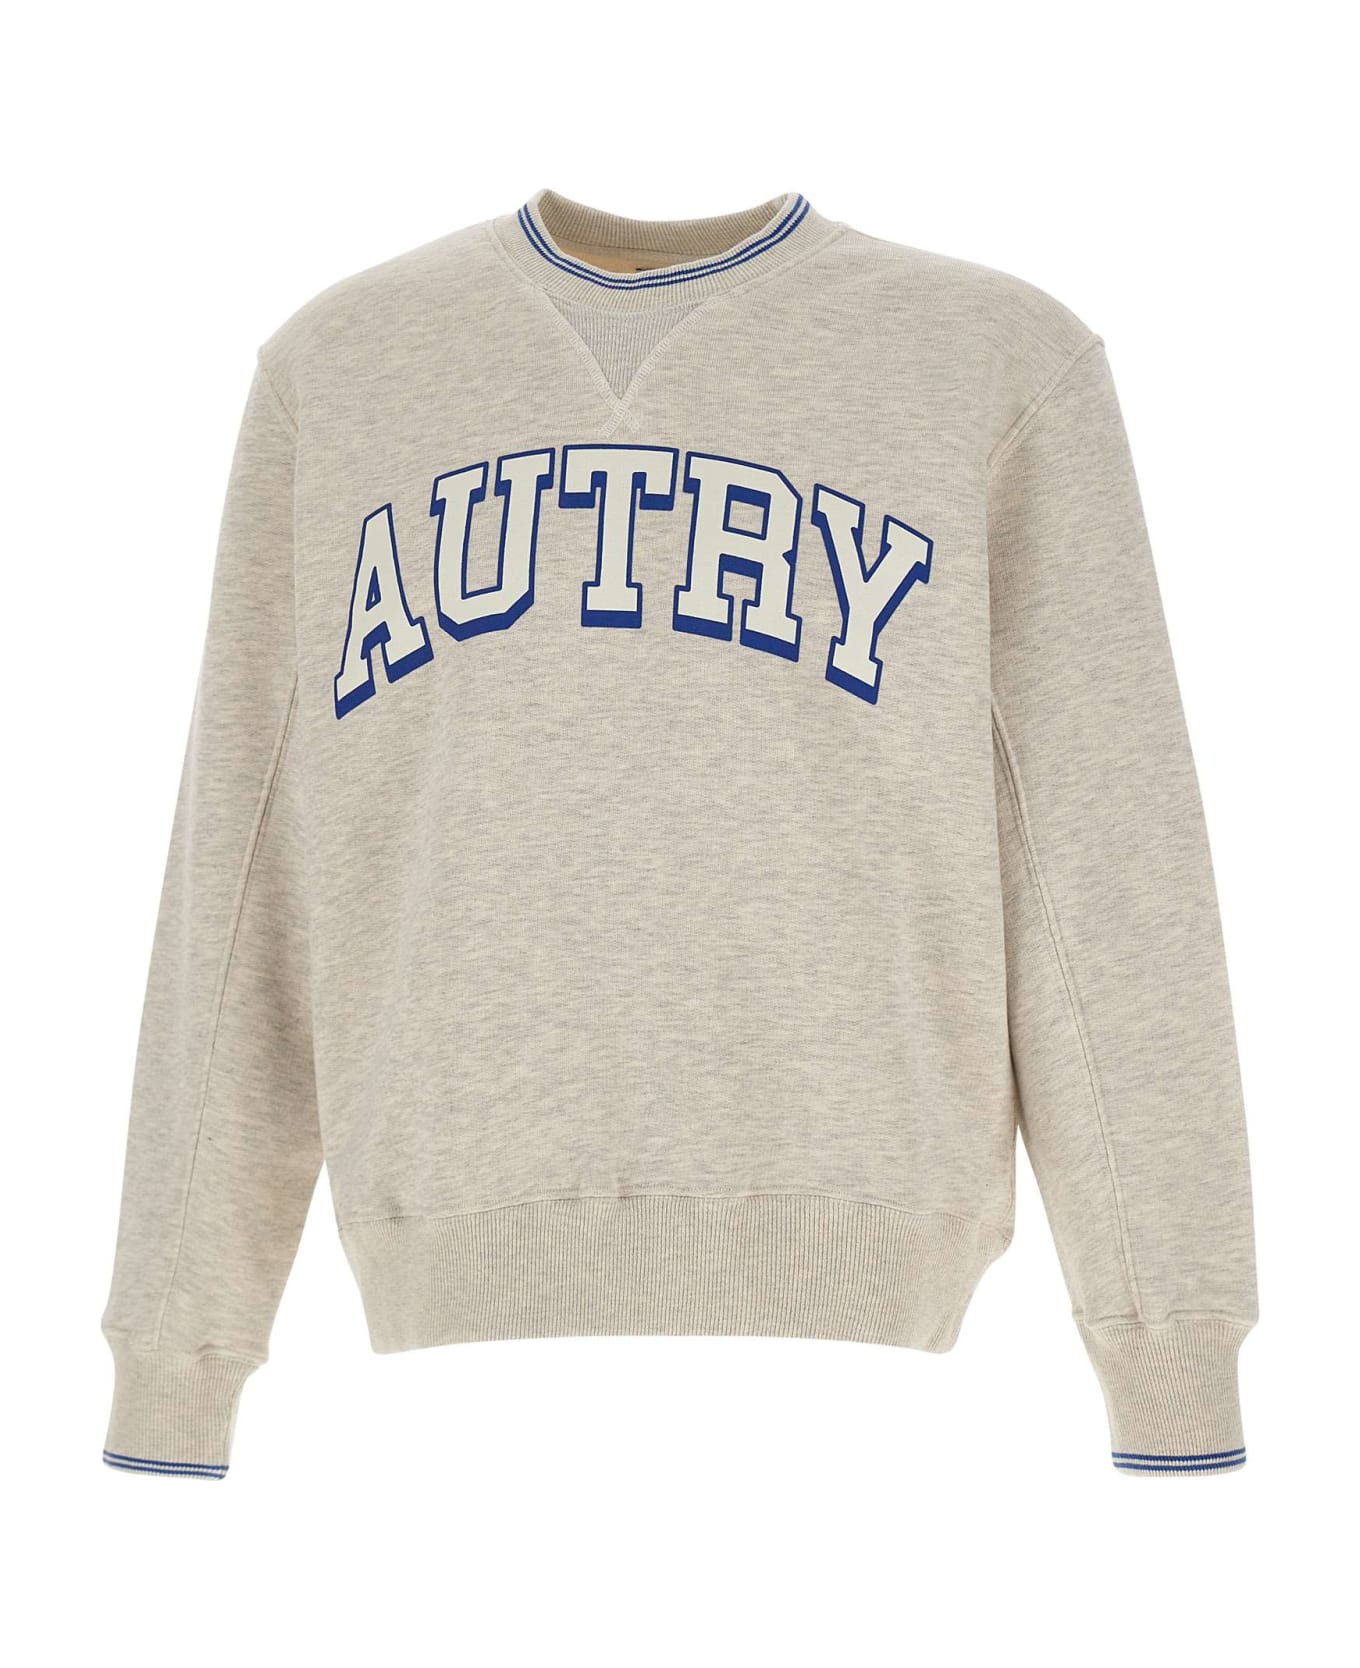 Autry "main Man Apparel" Cotton Sweatshirt - GREY